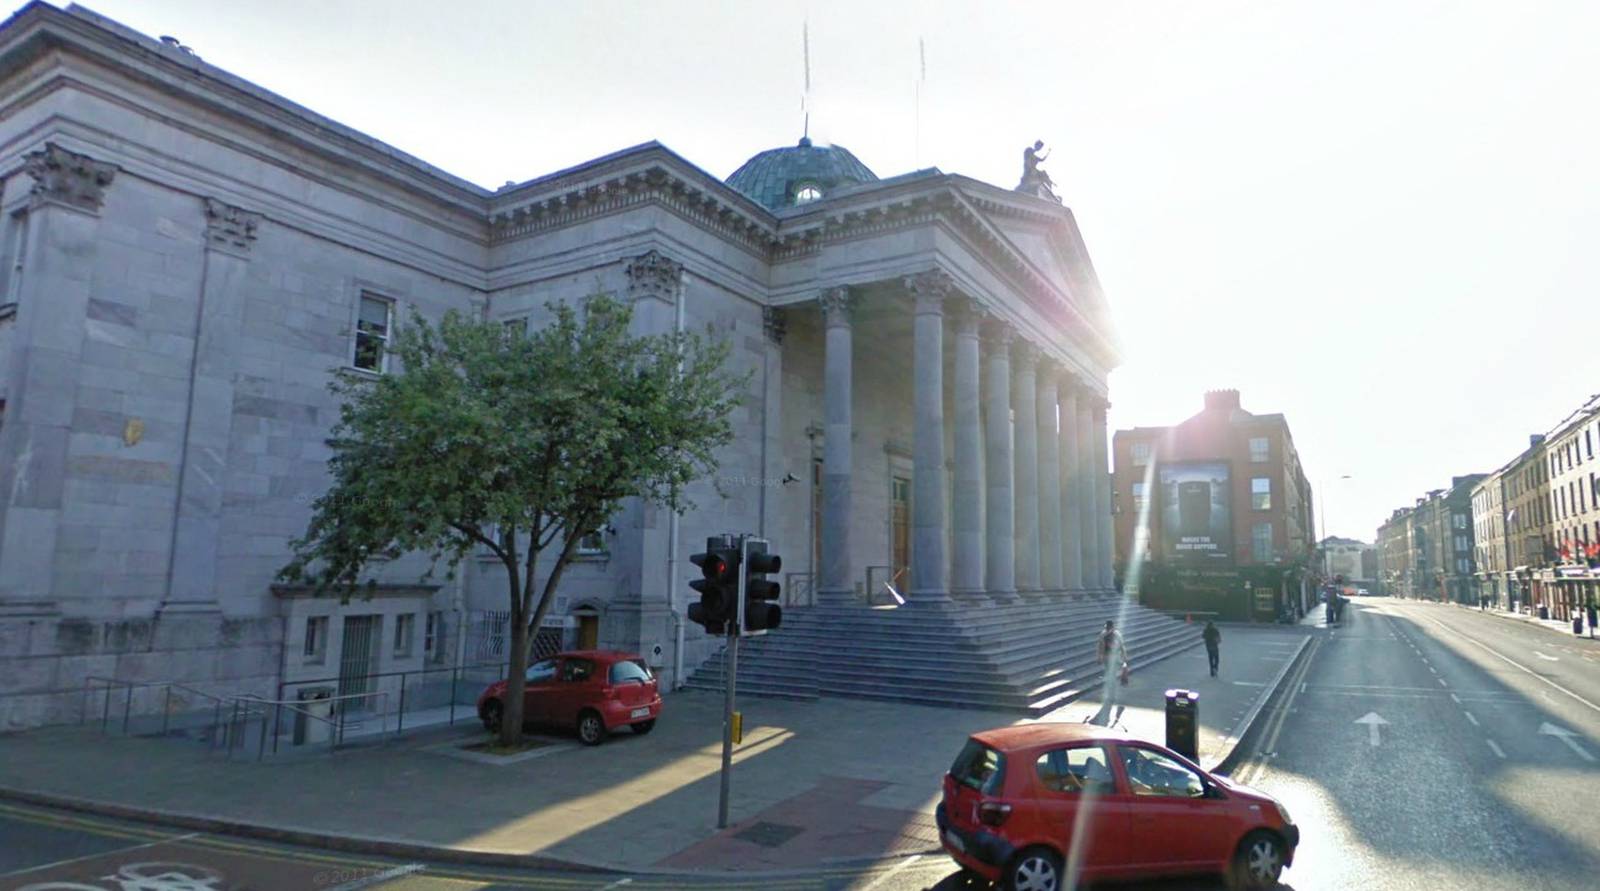 Cork Court House